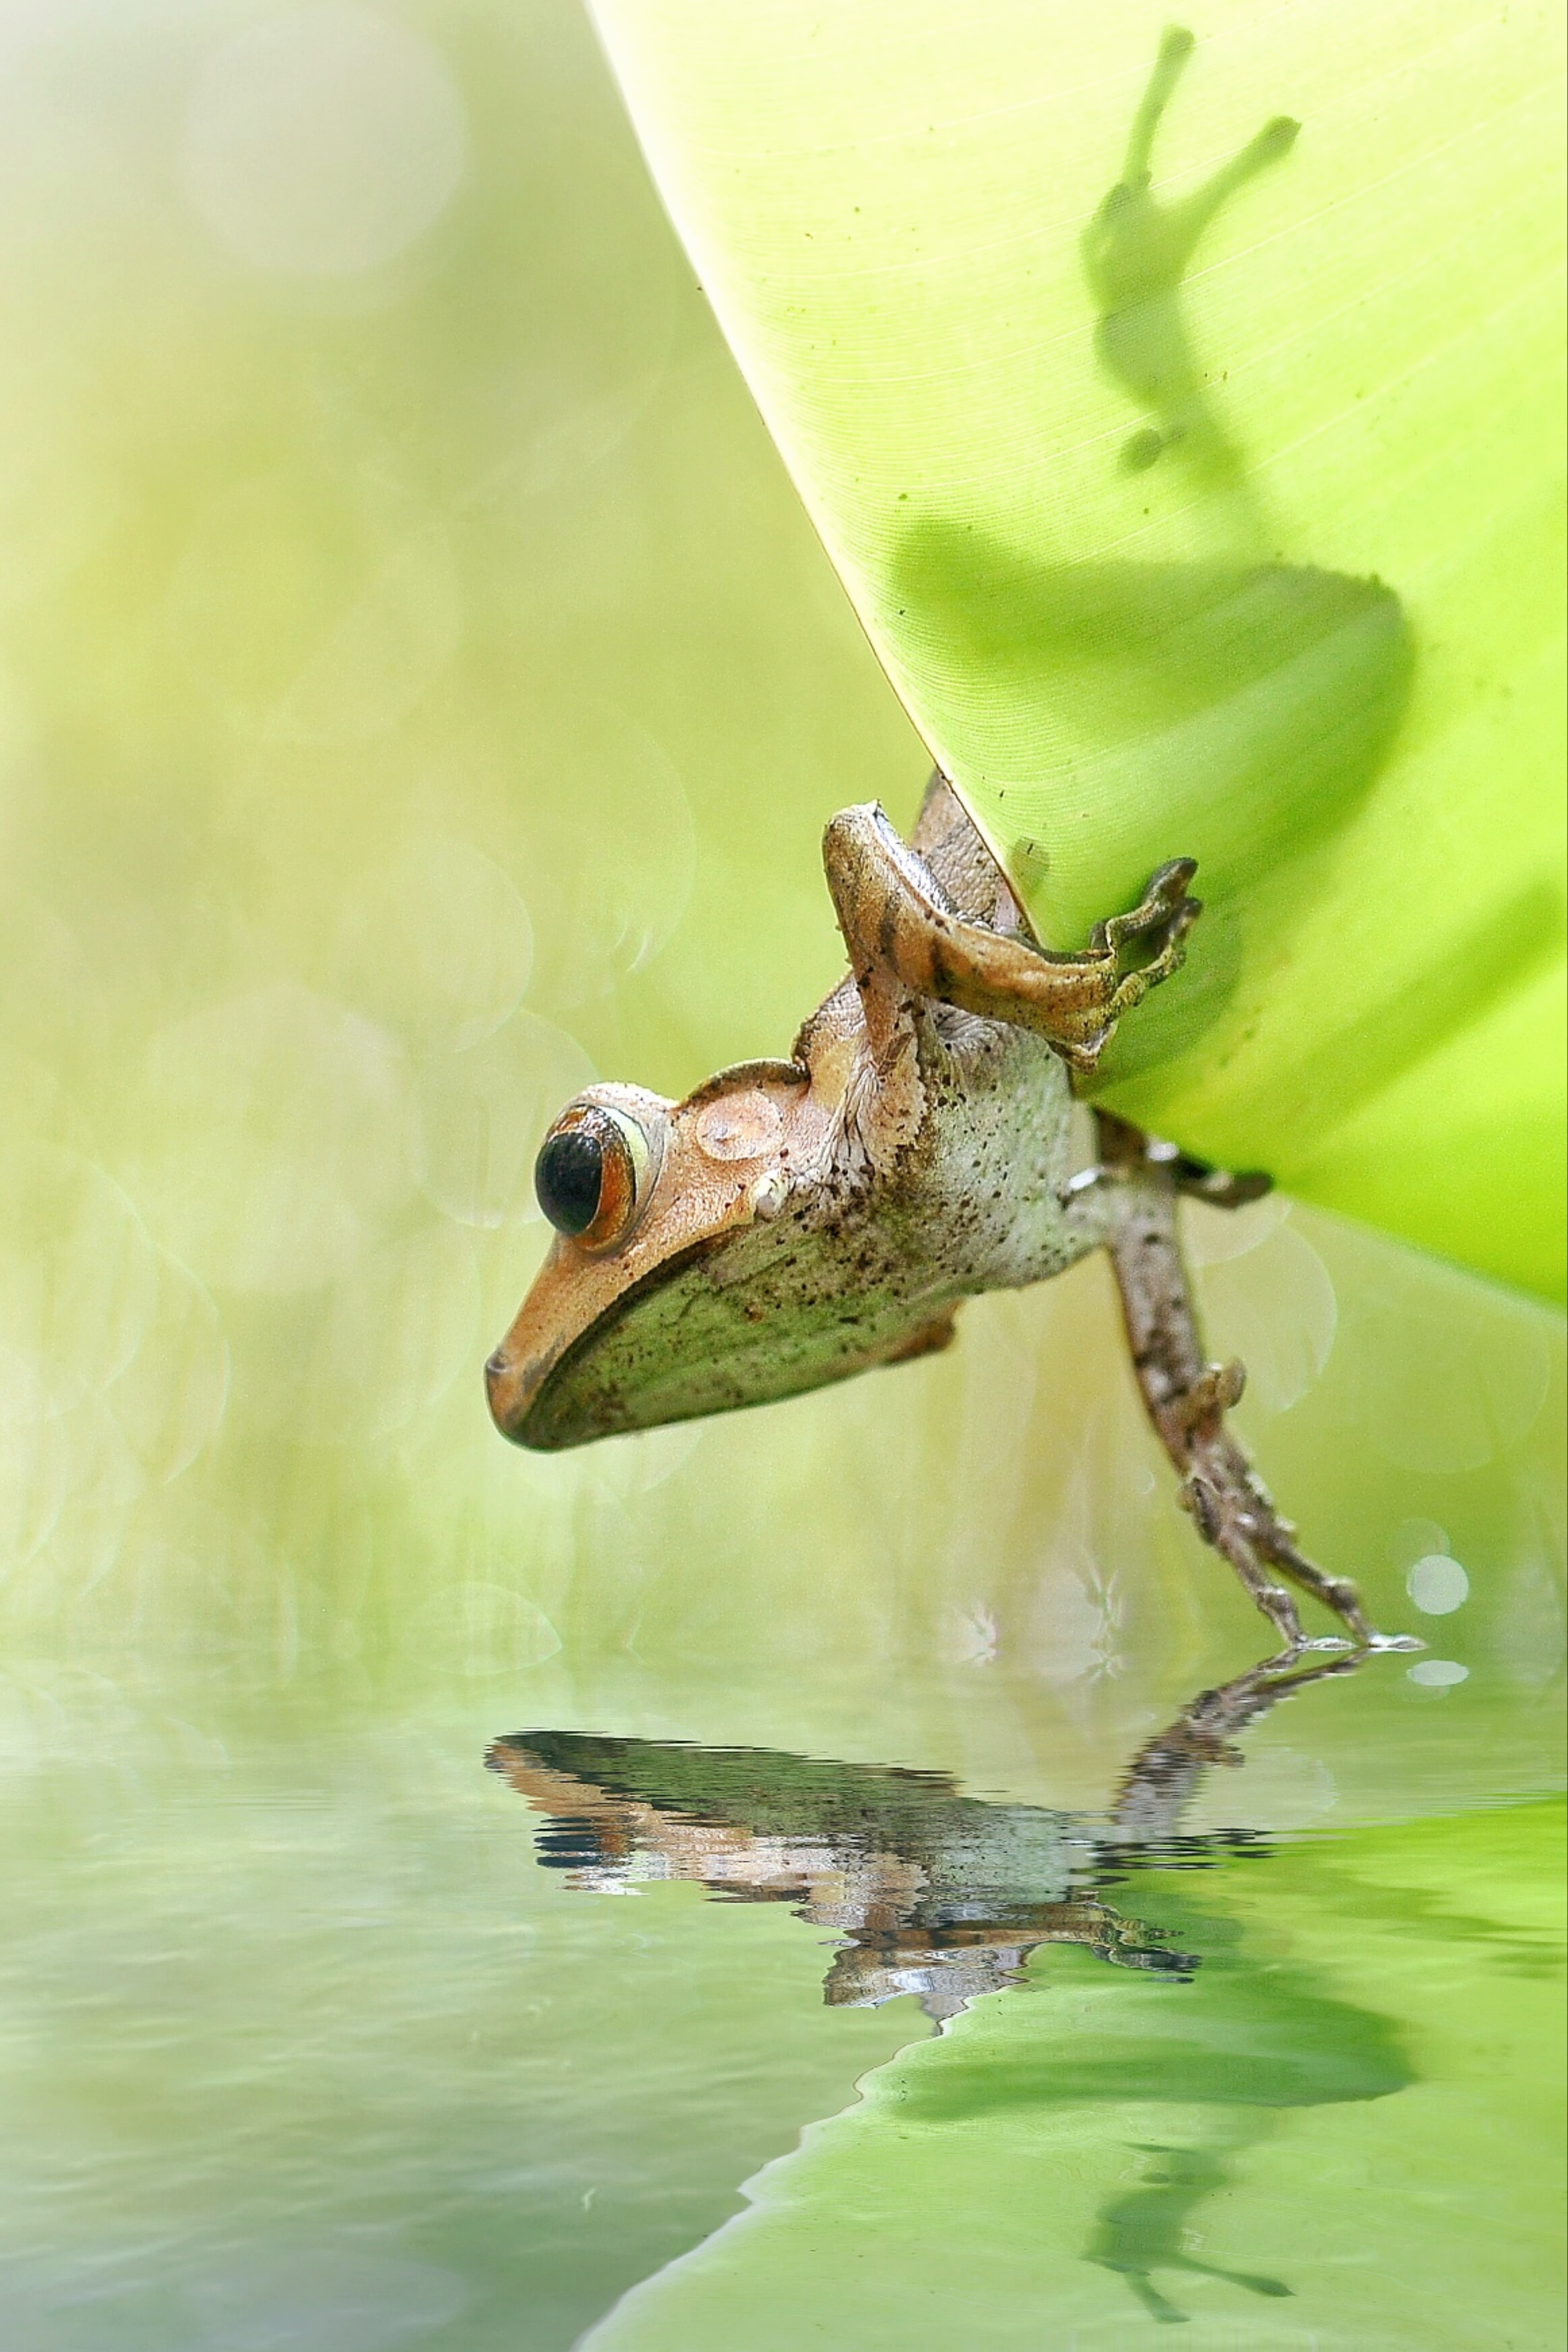 A frog halfway between leaf and water